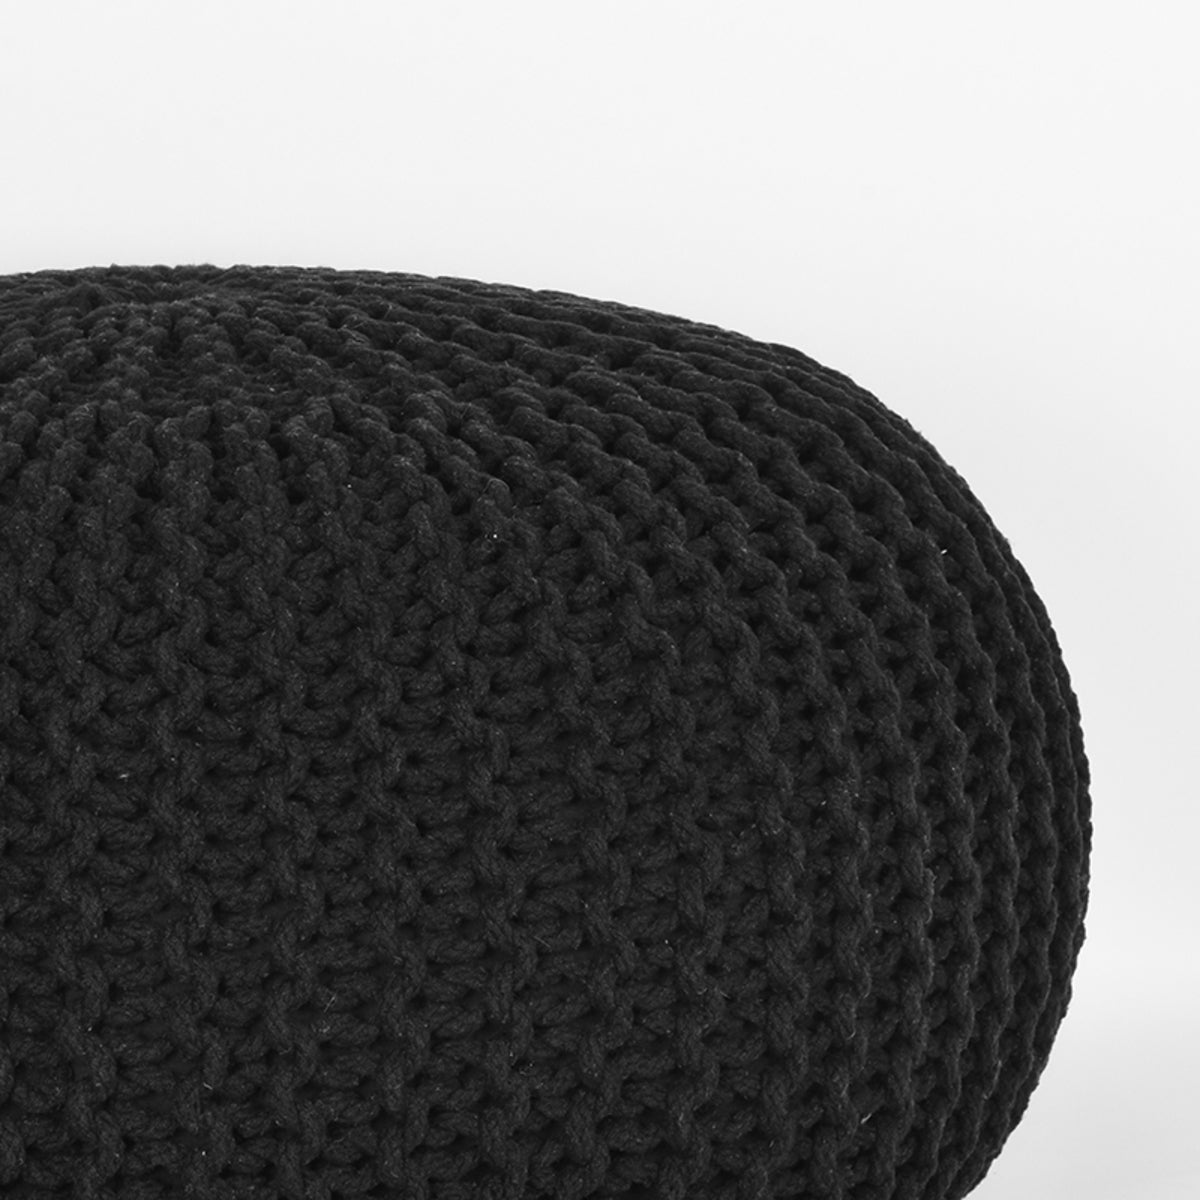 LABEL51 Pouf Knitted - Black - Cotton - L